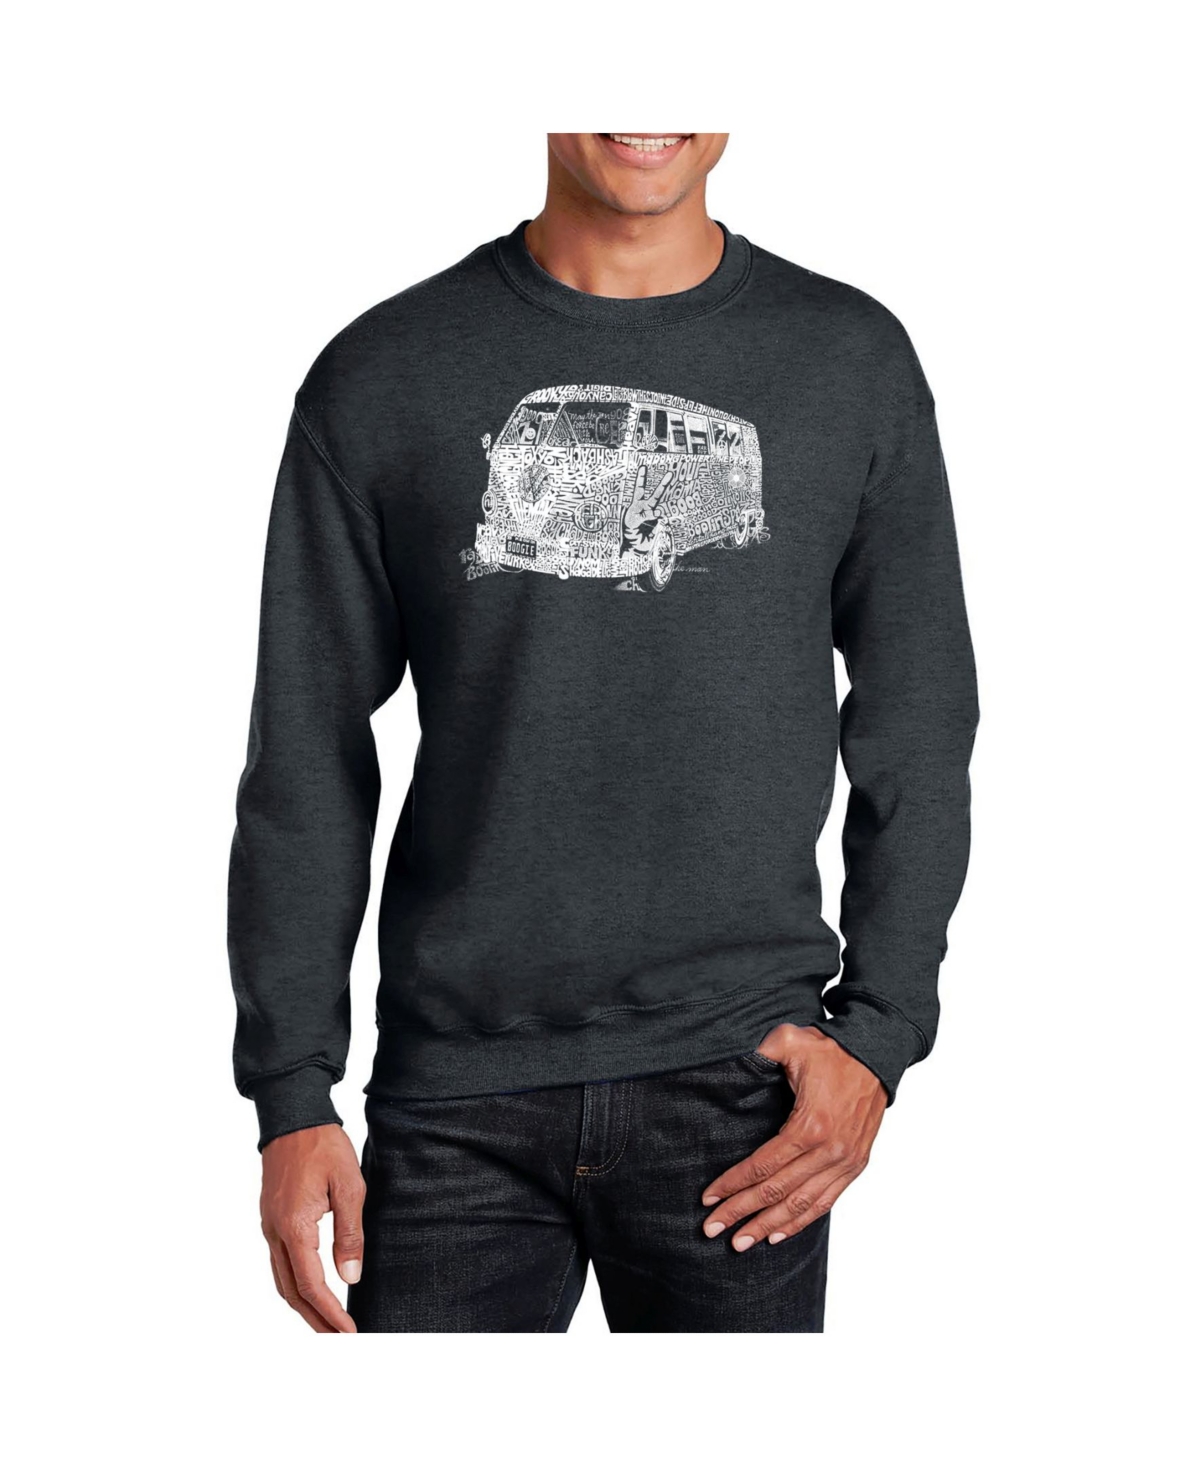 Word Art The 70's Crewneck Sweatshirt - Gray